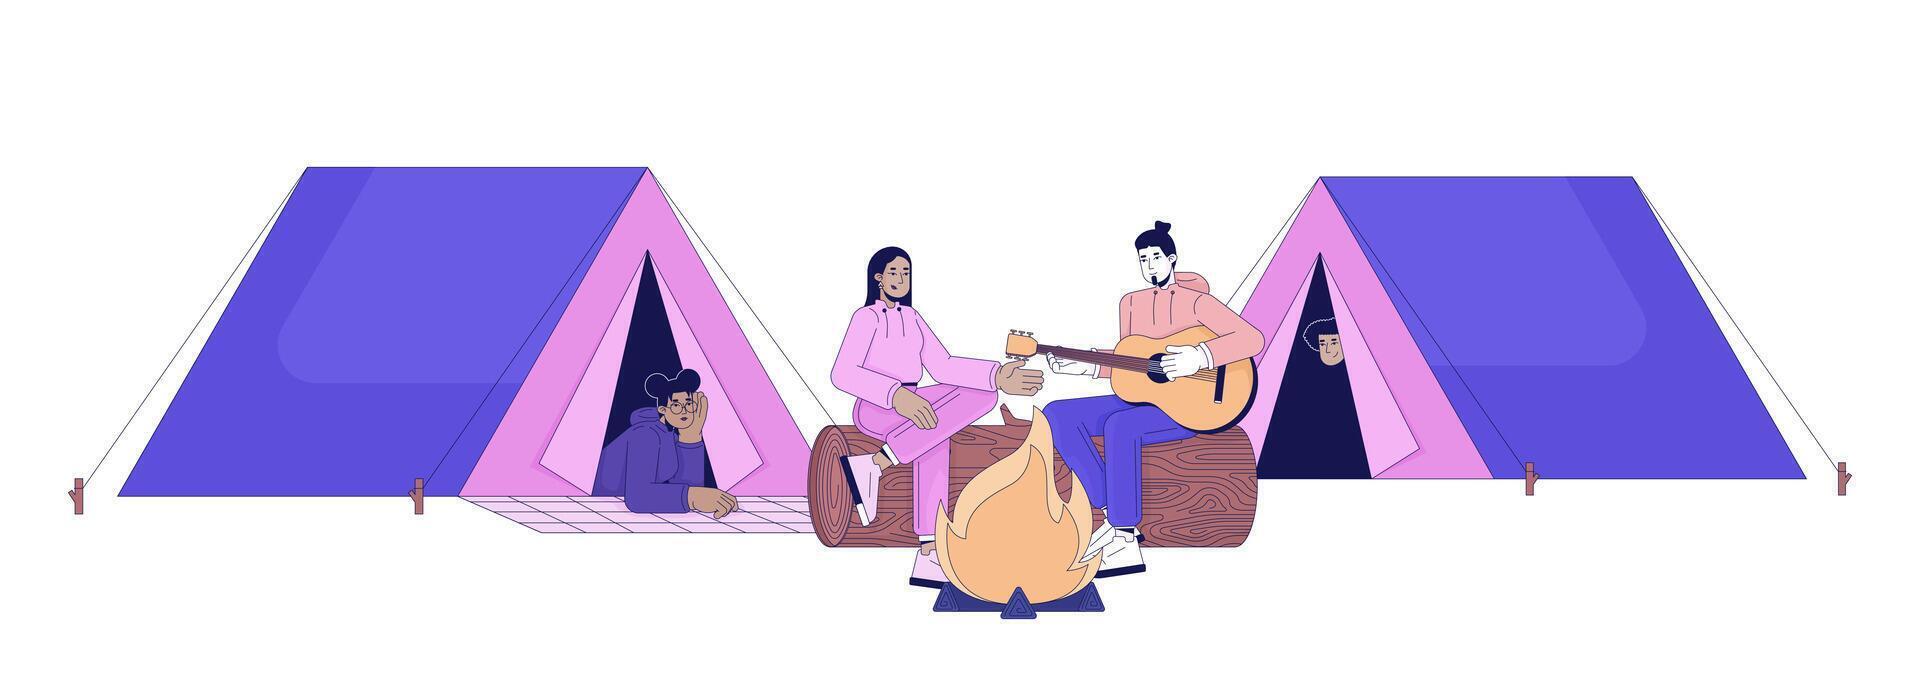 vreugdevuur vrienden camping tenten lineair tekenfilm tekens vector